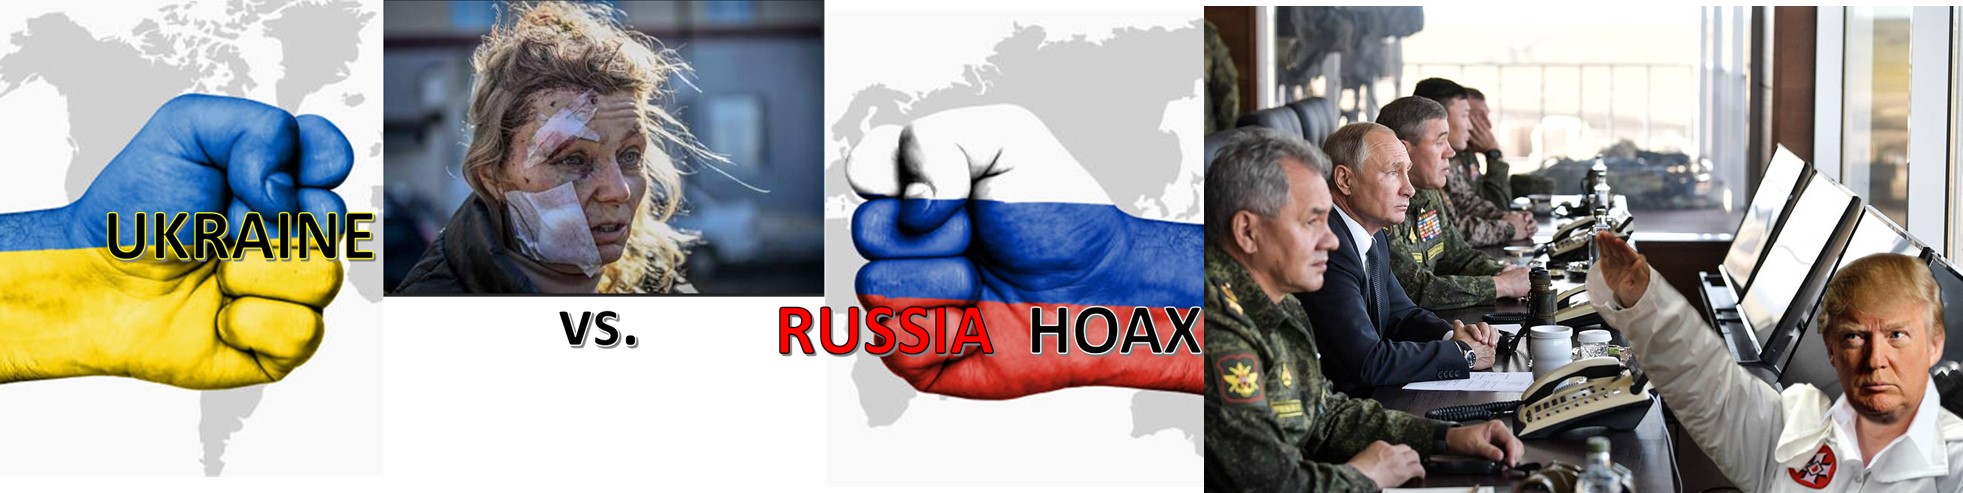 Ukraine vs Russia HOAX NAZI Allegiance